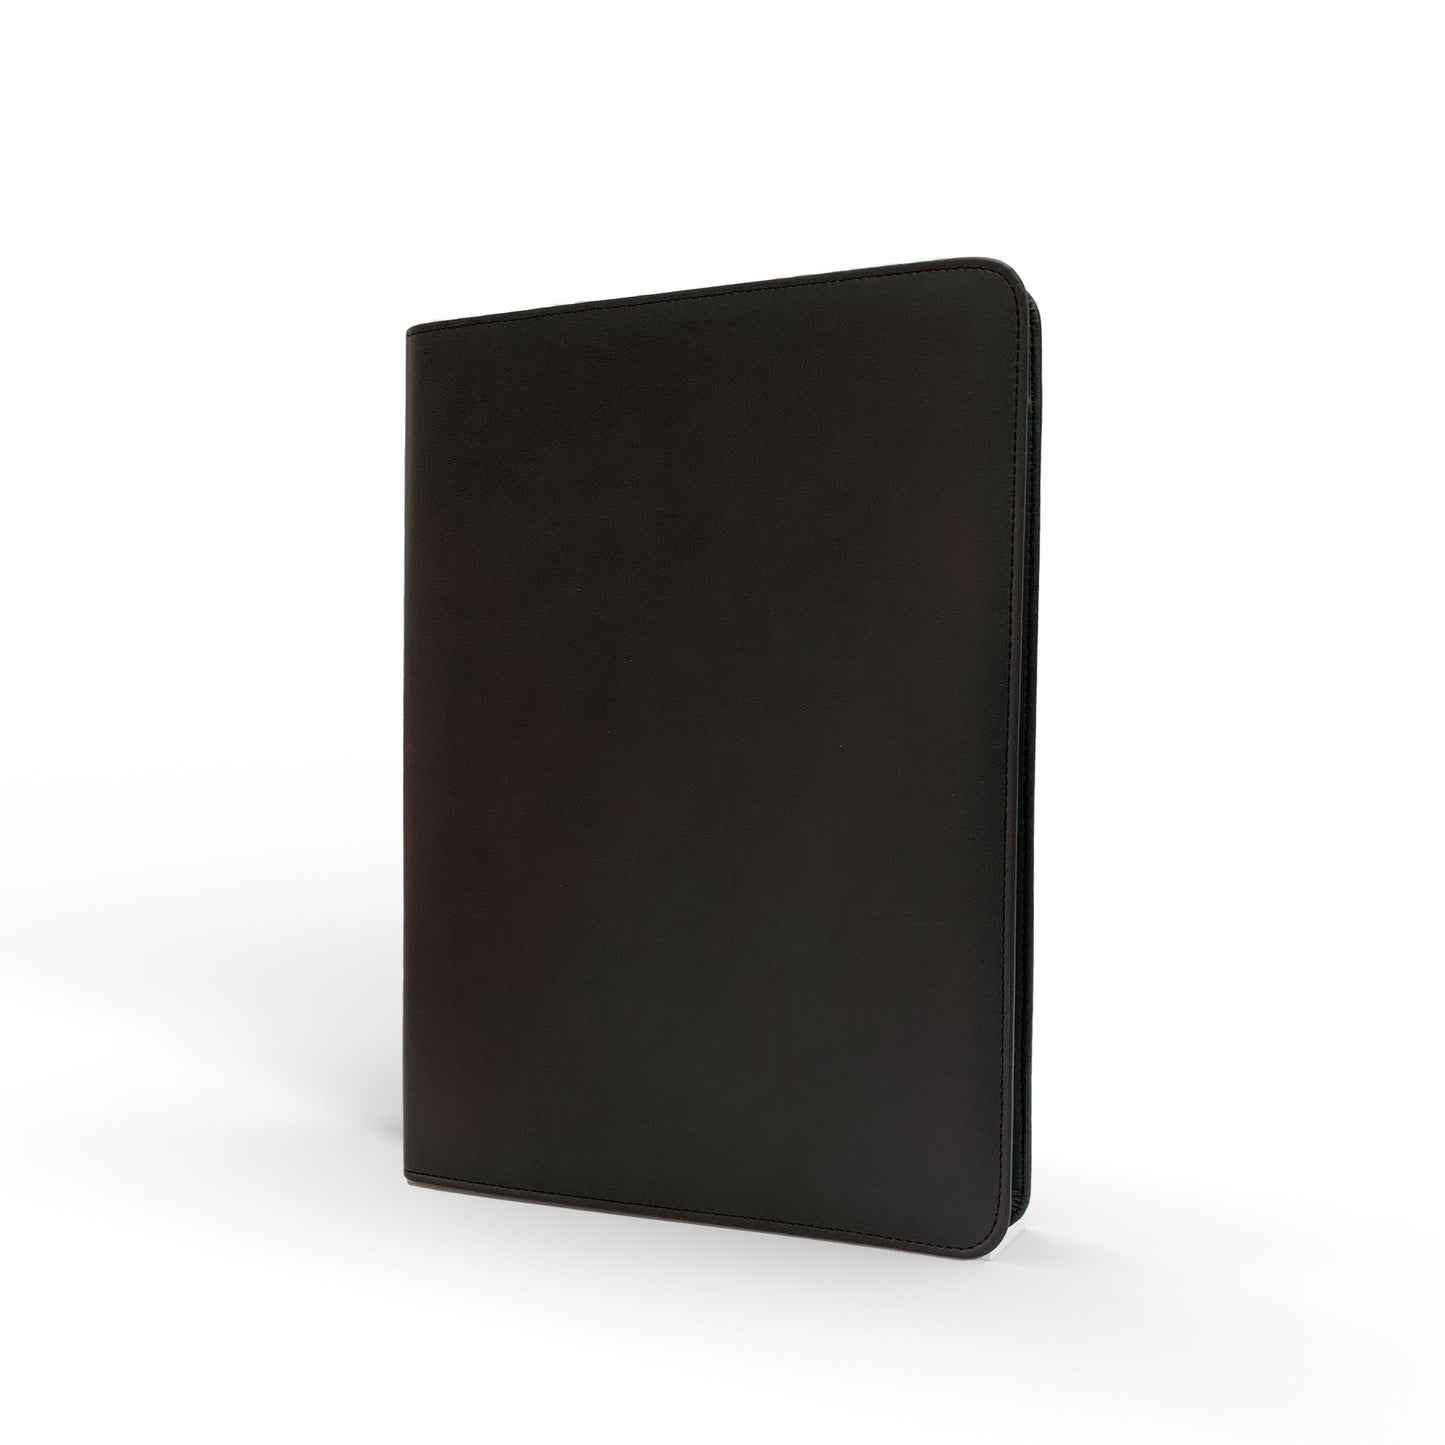 Intentus Organiser A4 PU Leather-Like Folder with Ruled Refill Pad - Clean Slate Black